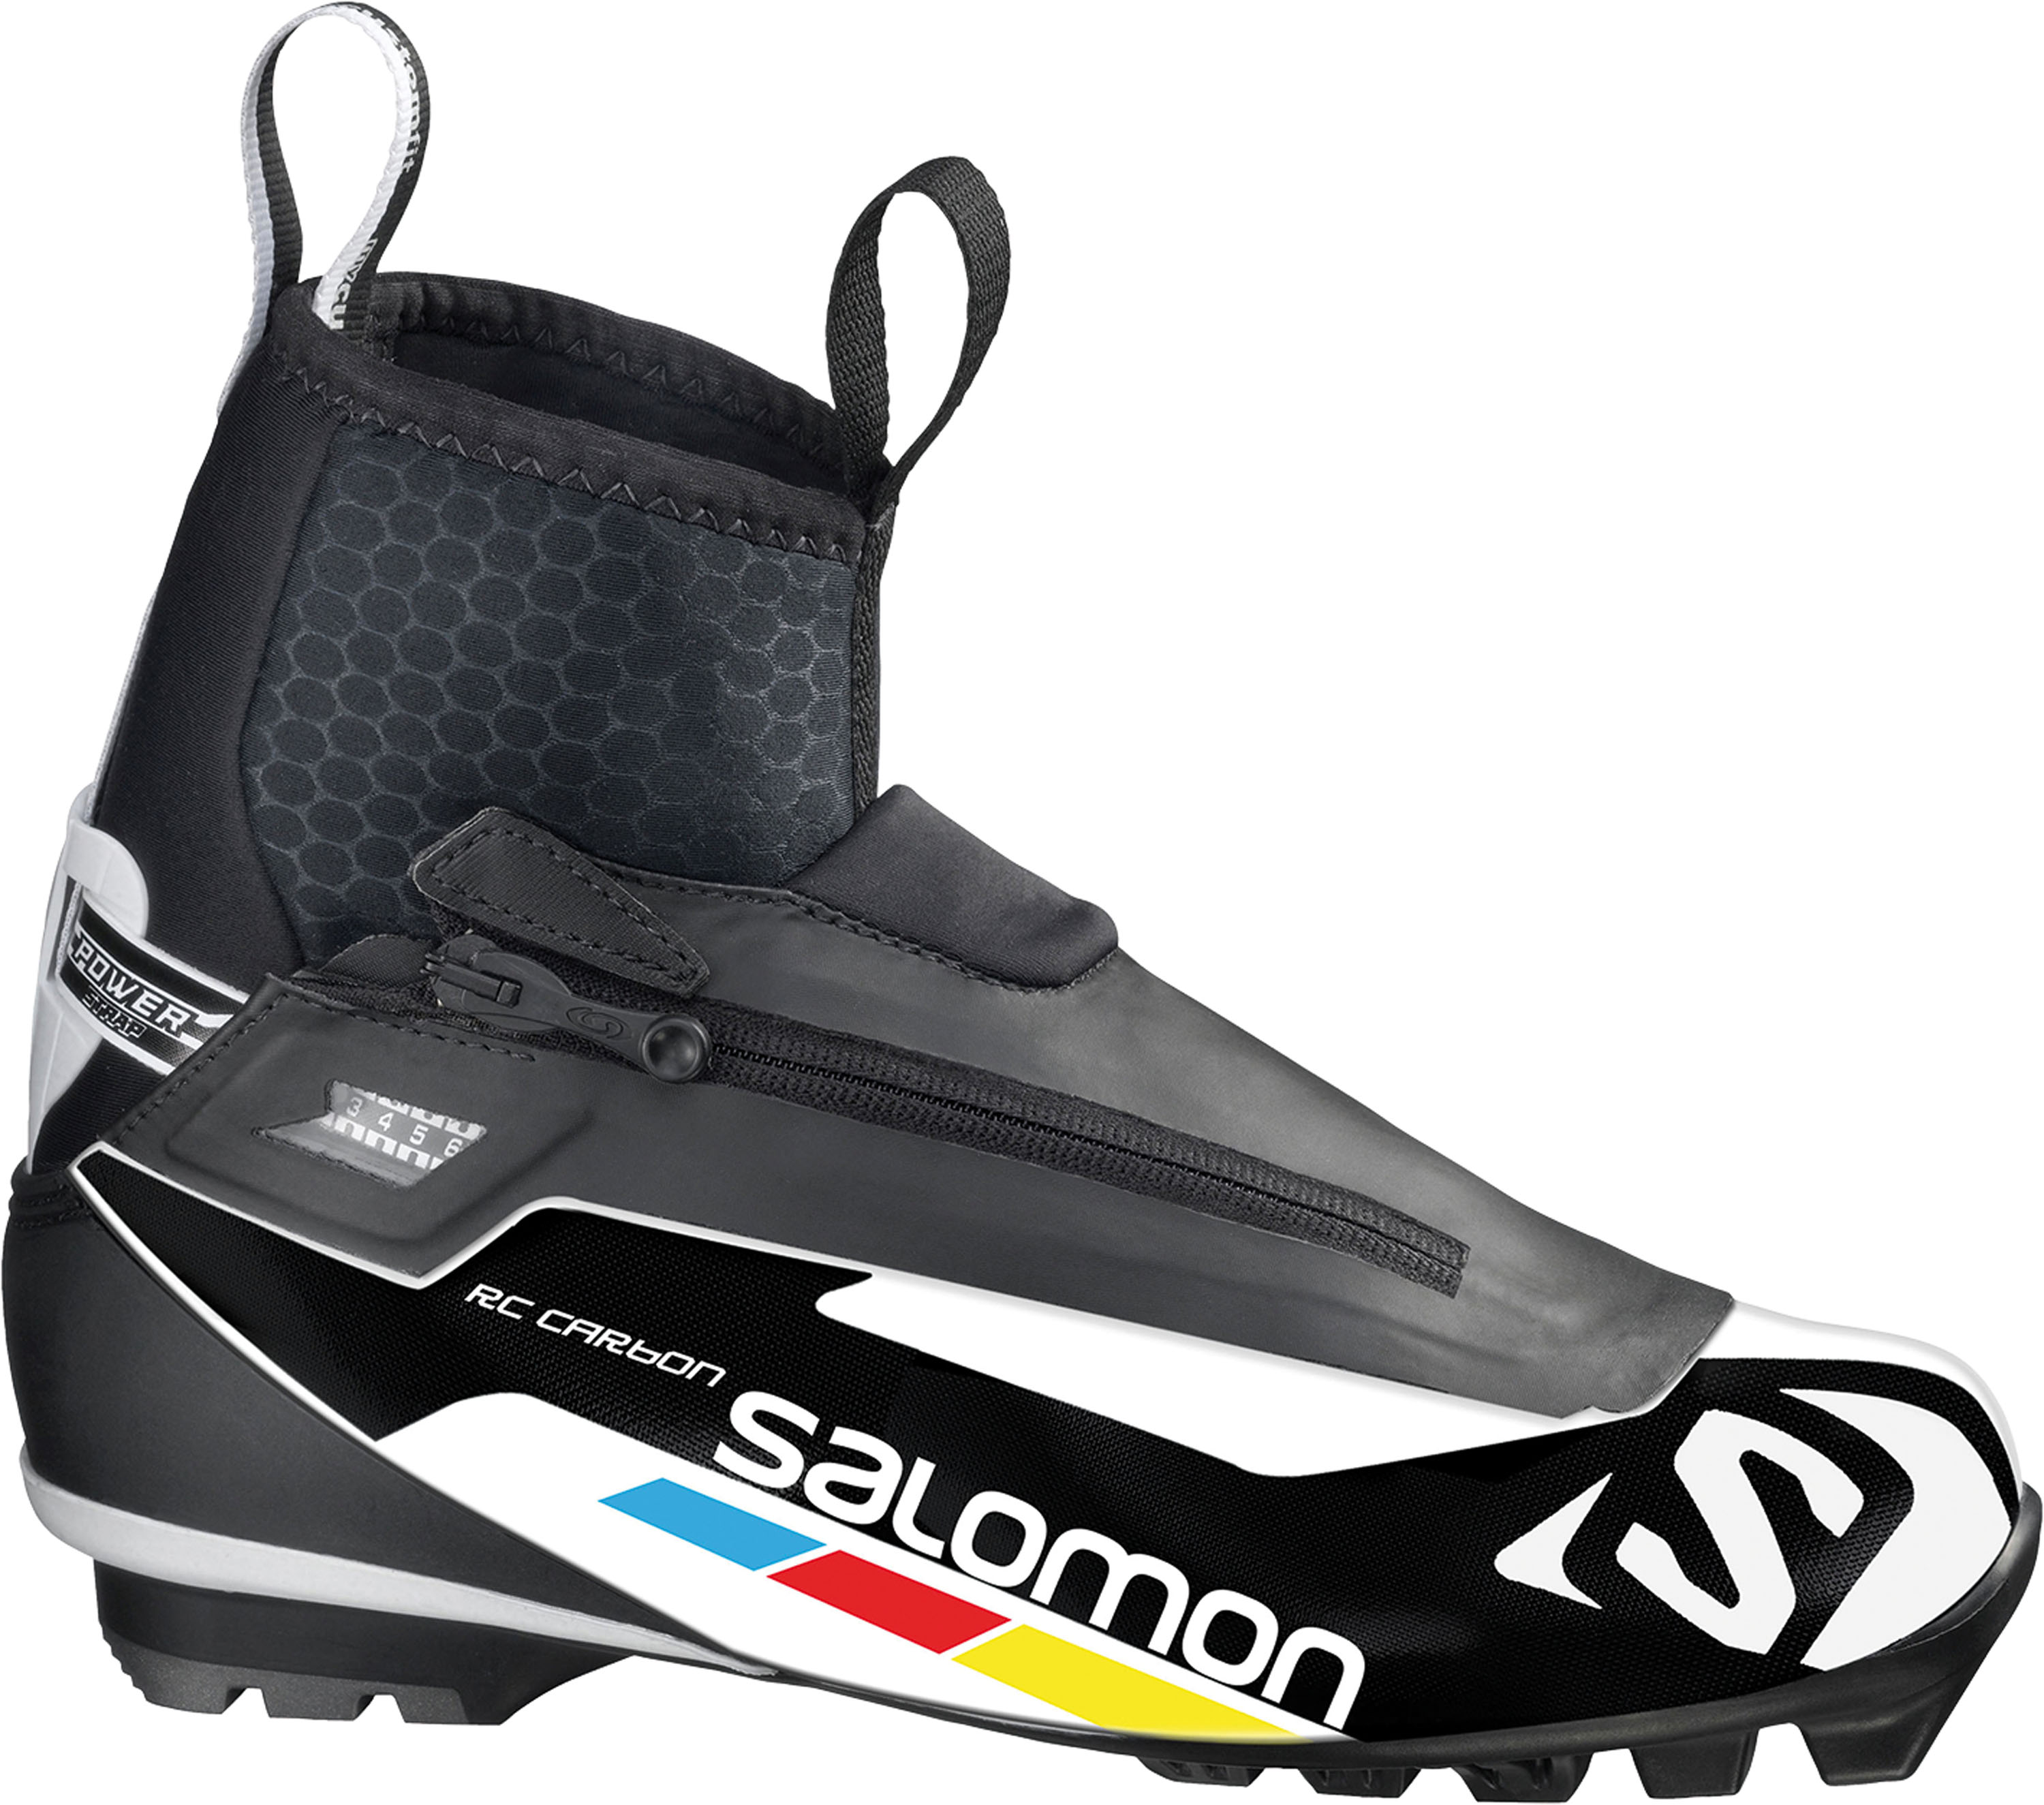 SALOMON RC CARBON Langlaufschuh für volle Kontrolle über den Ski. © Salomon